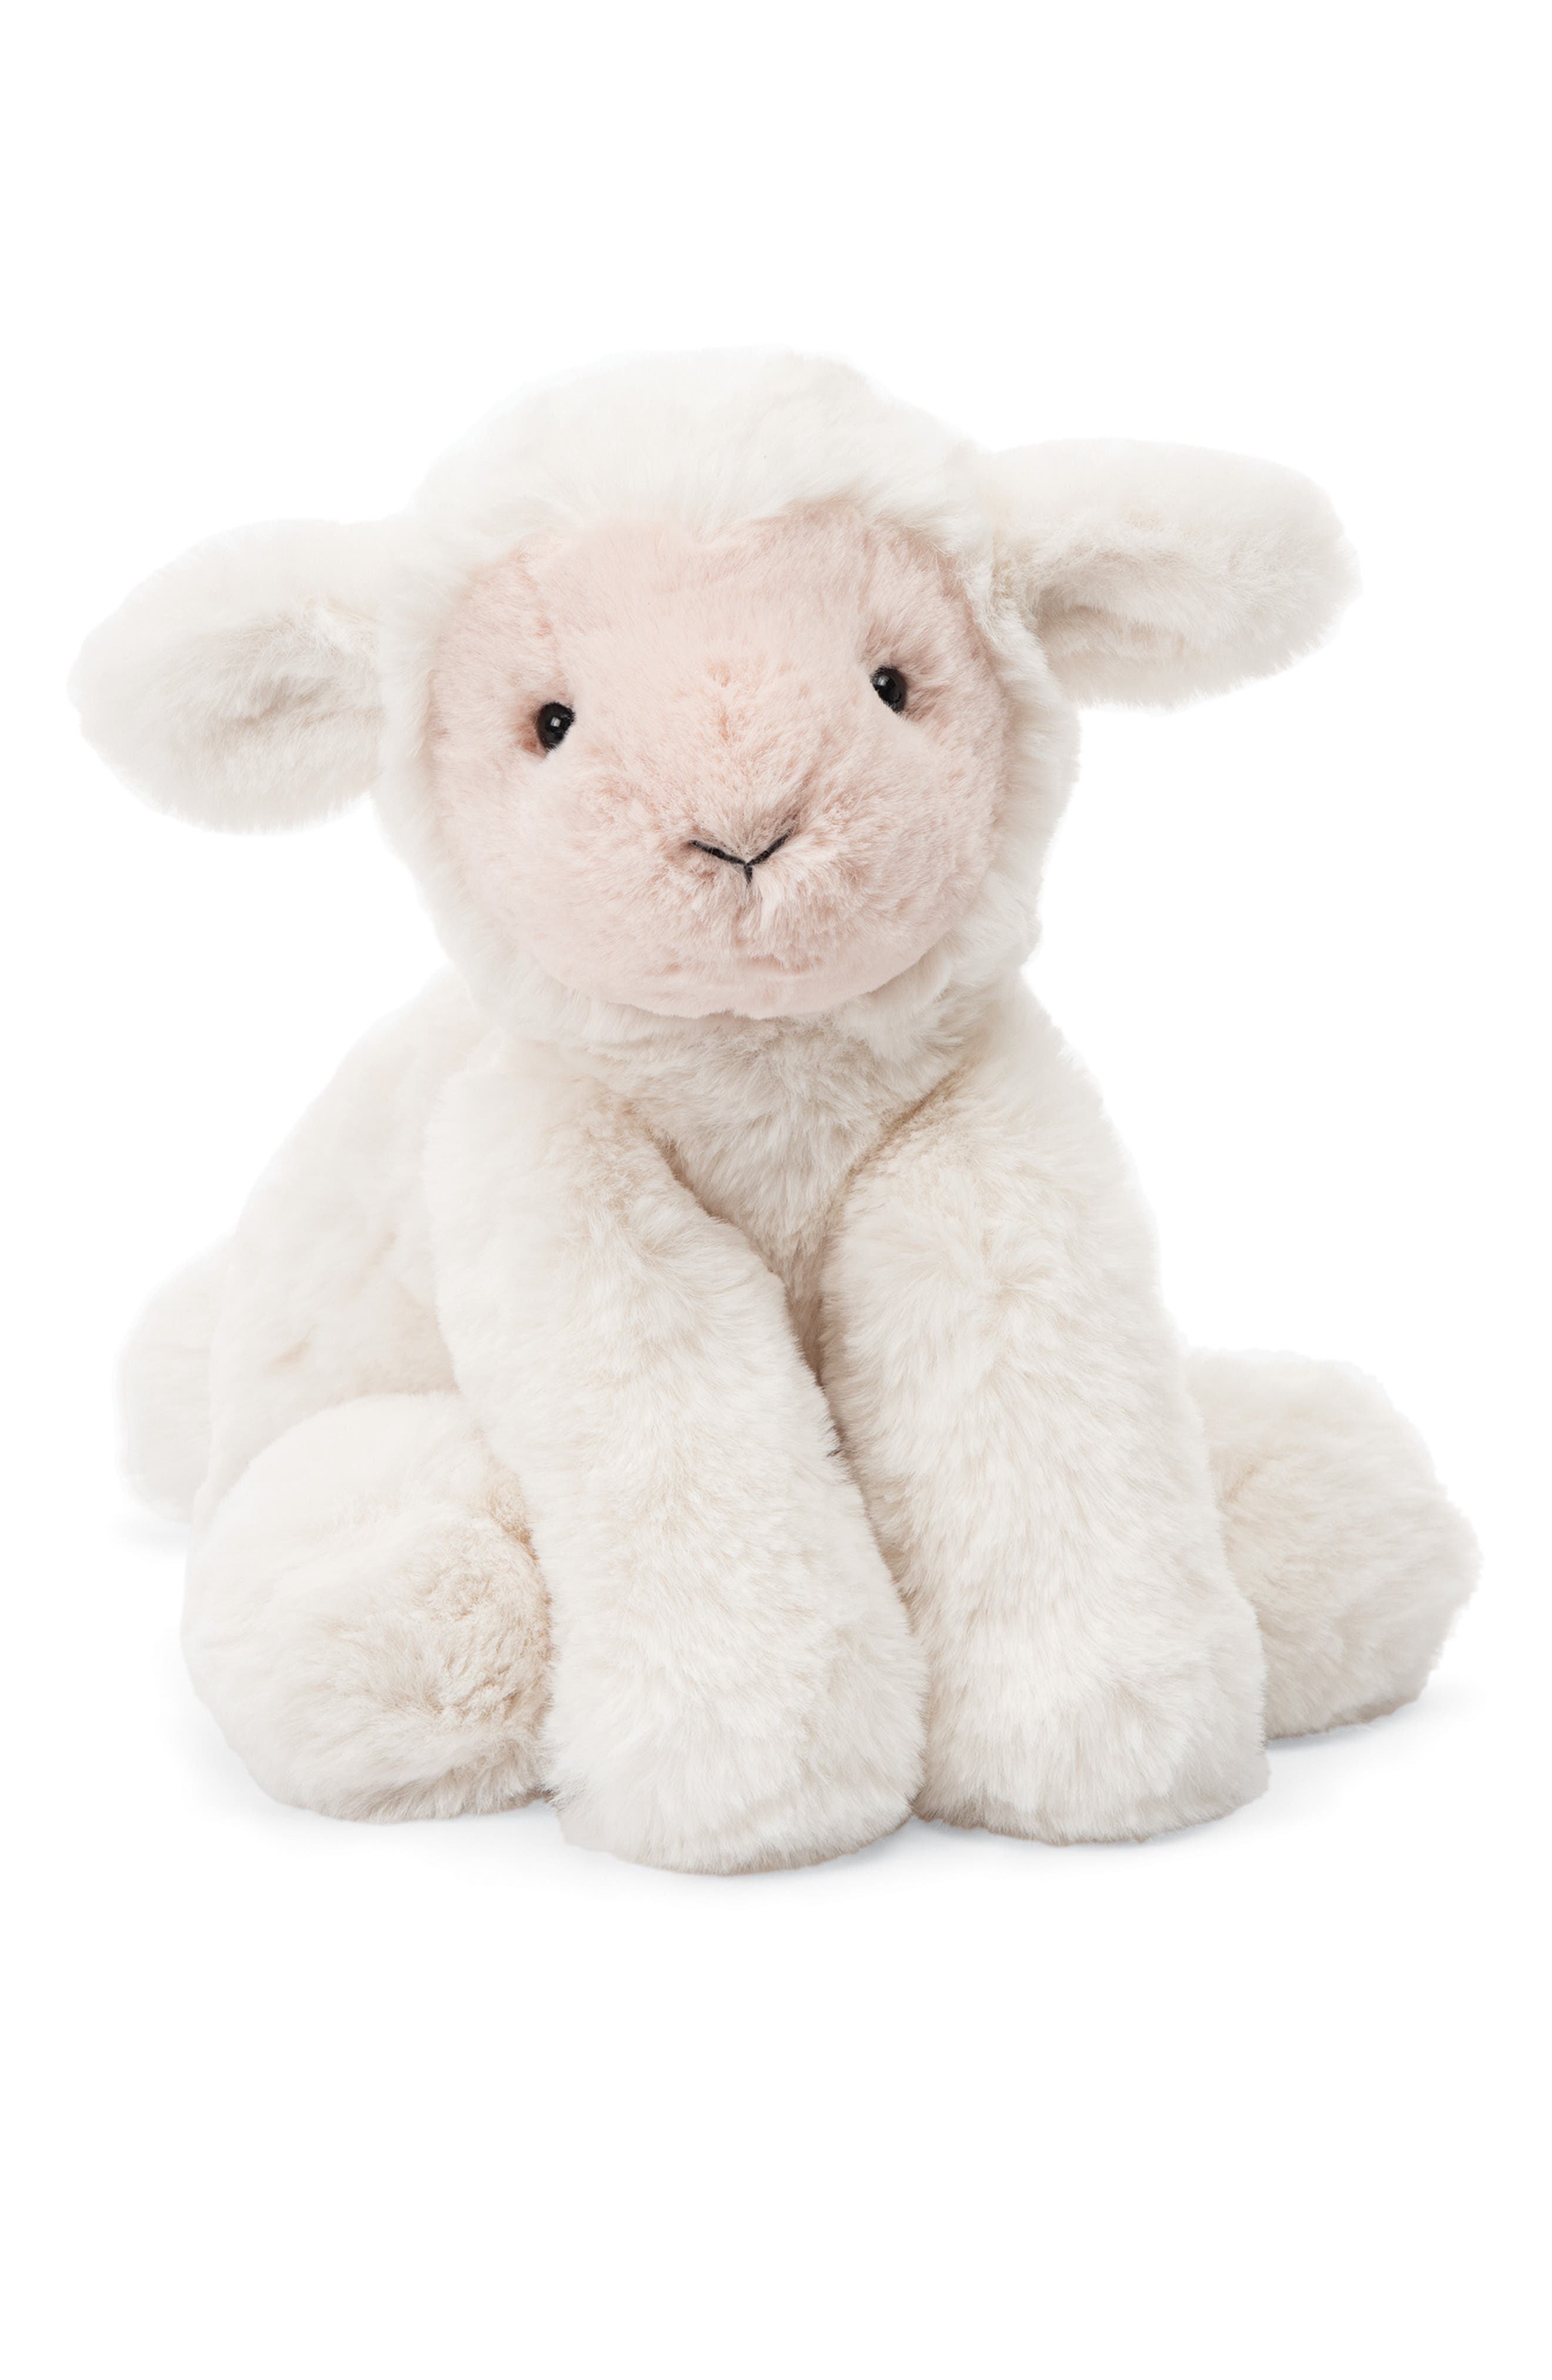 stuffed animal lamb